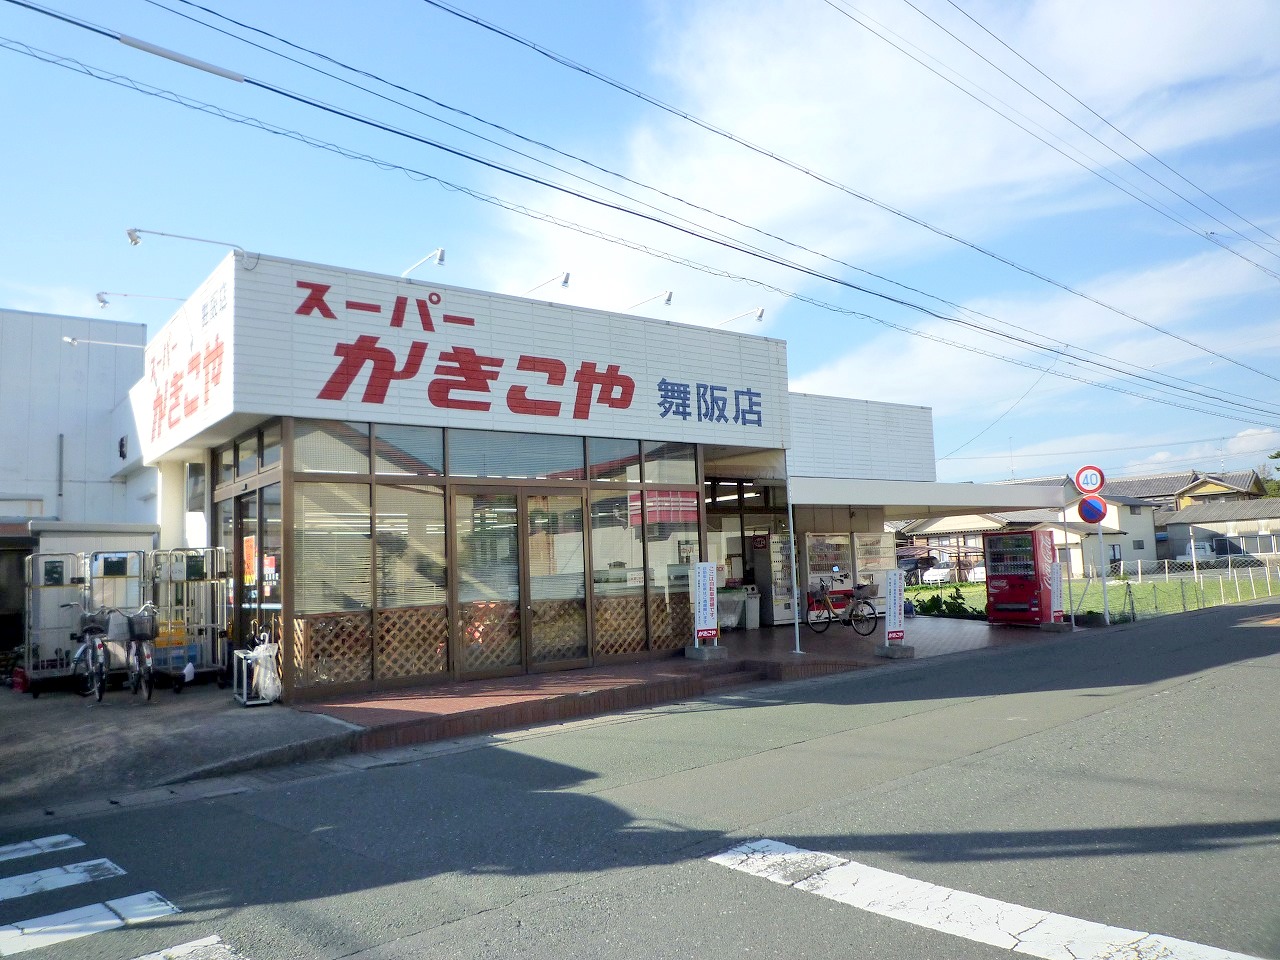 Supermarket. Kakiko and Maisaka store up to (super) 294m